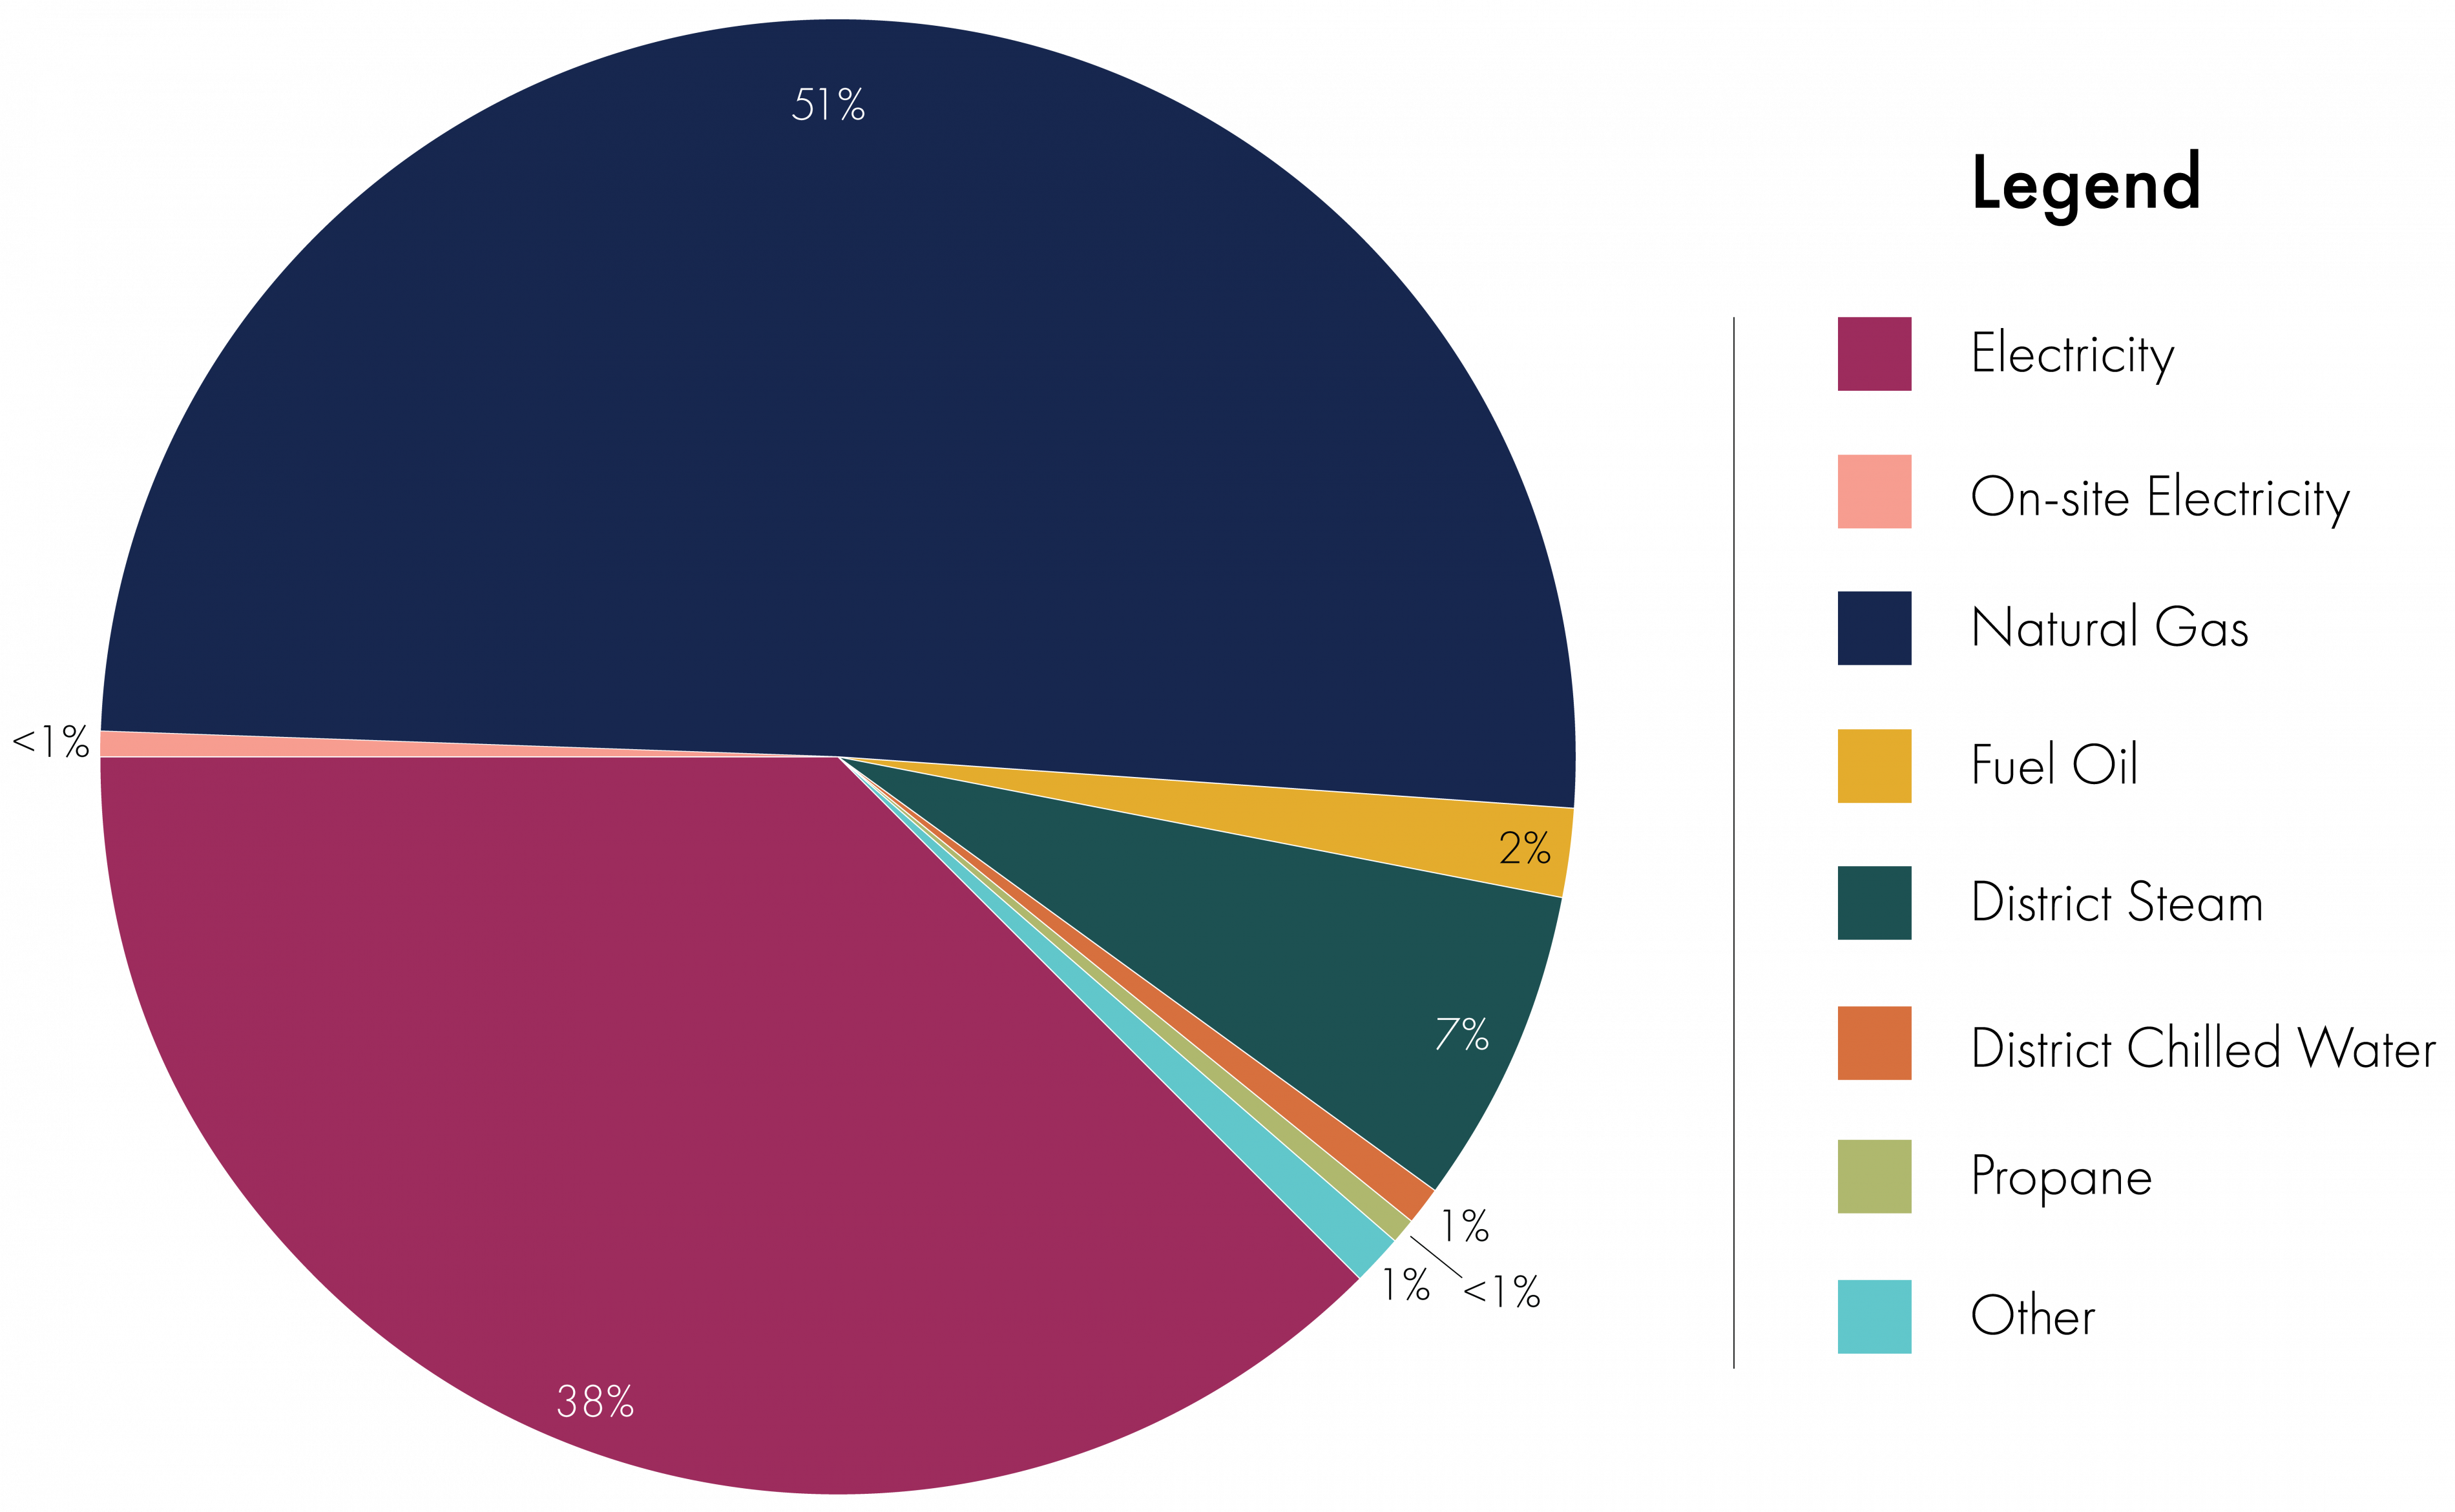 Pie chart - total energy use breakdown